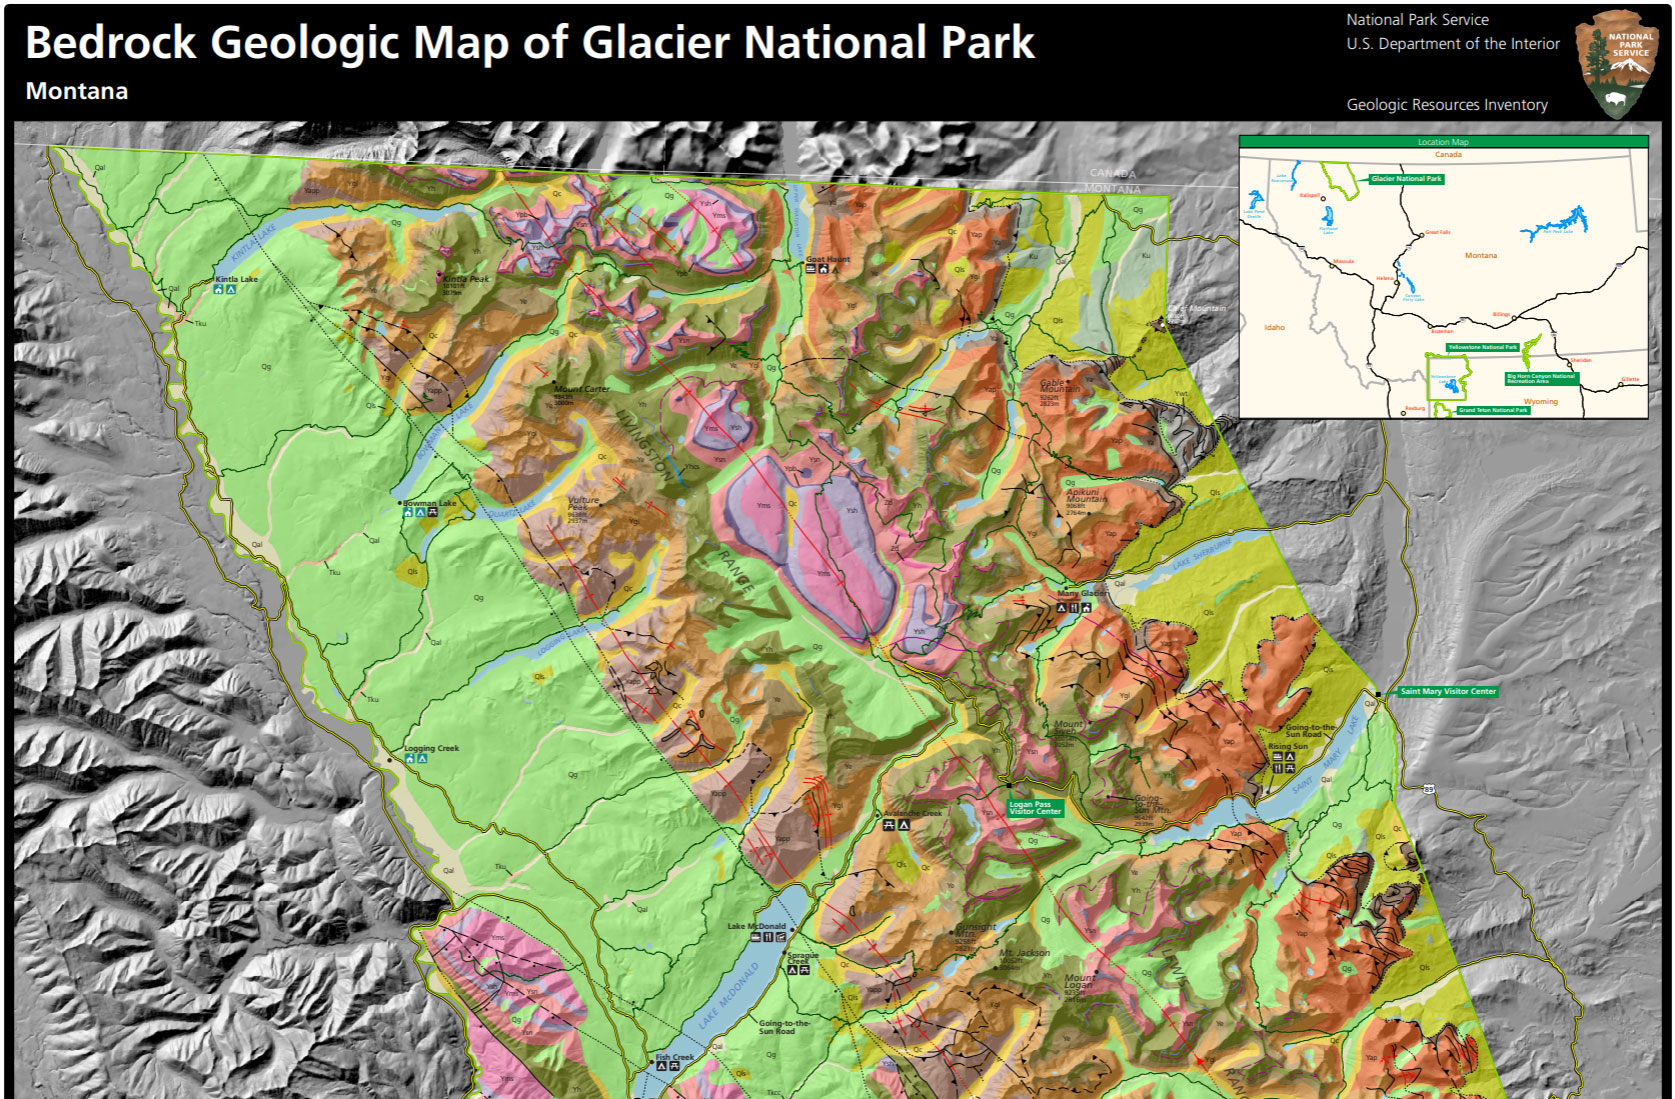 Nps Geodiversity Atlas Glacier National Park Montana U S National Park Service